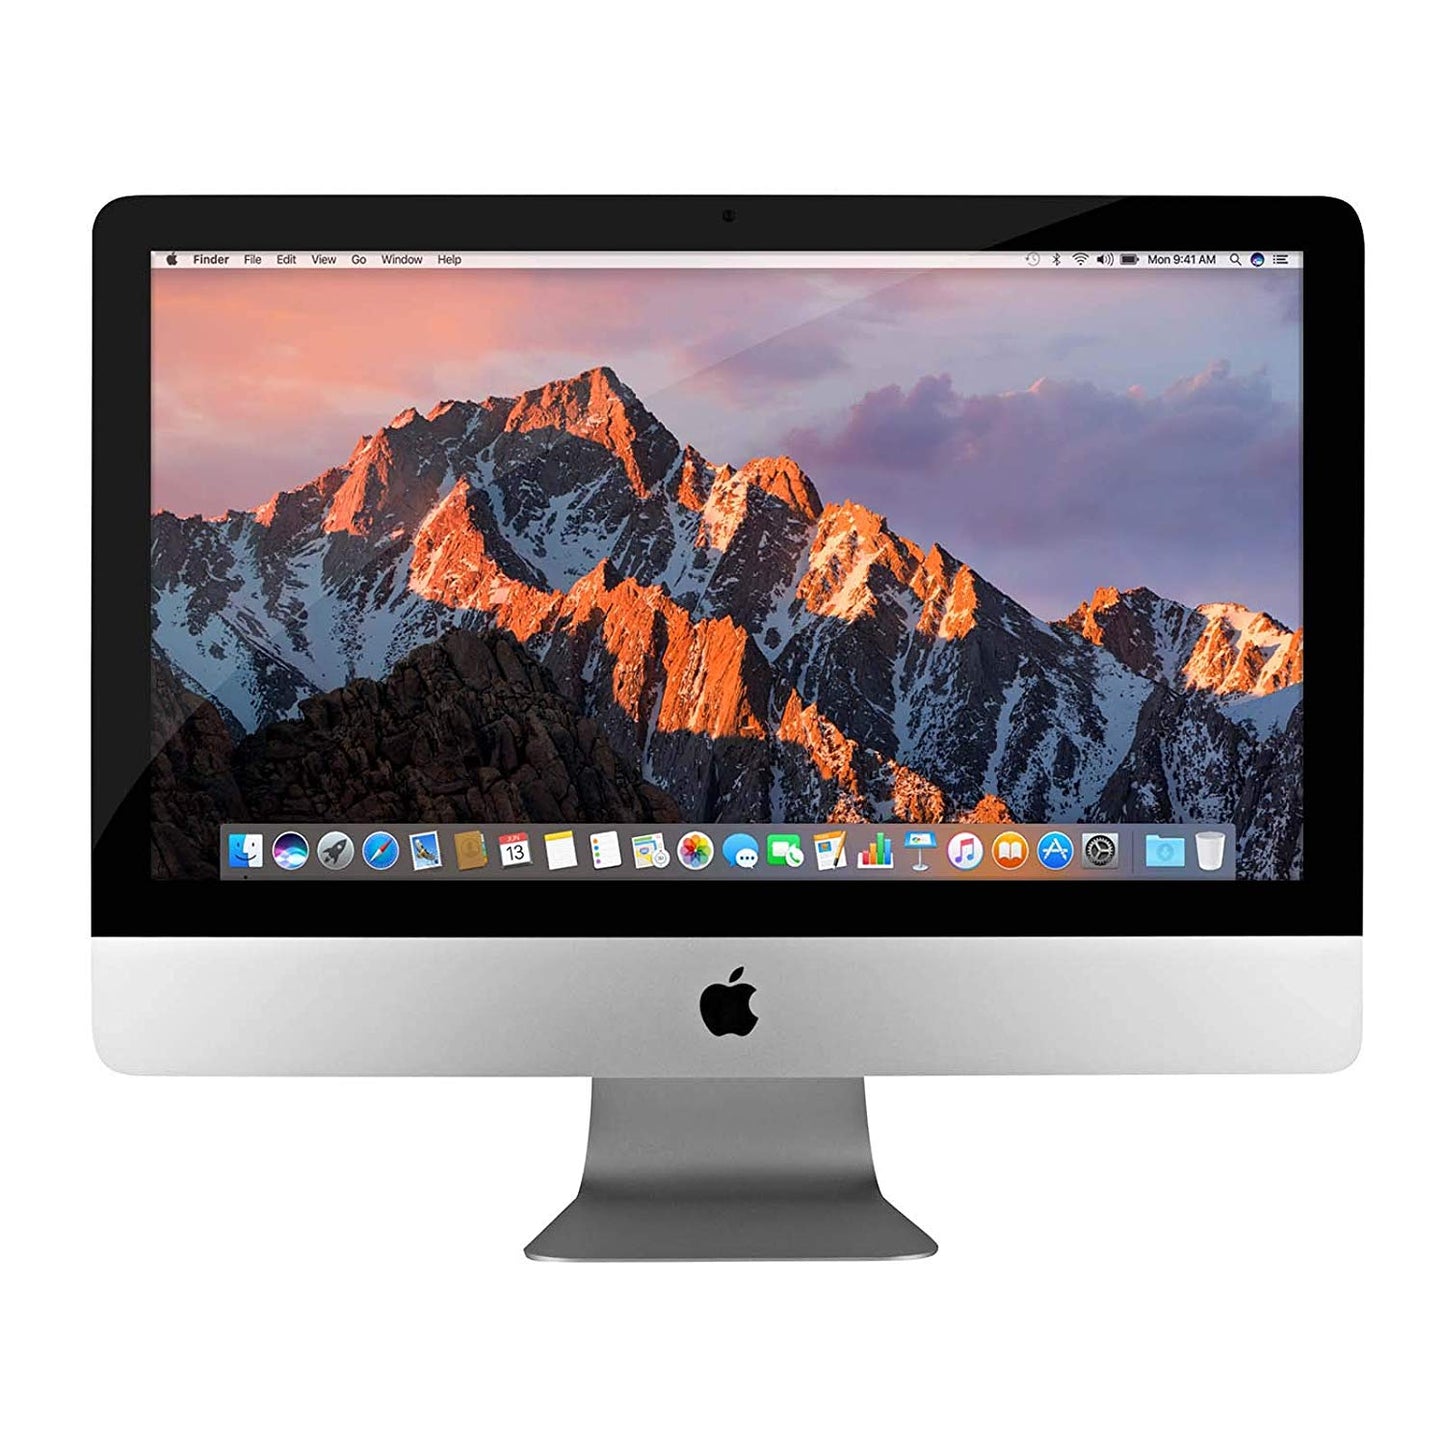 Apple iMac 21.5in 2.7GHz Core i5 (ME086LL/A) All In One Desktop, 8GB Memory, 1TB Hard Drive, MacOS 10.12 Sierra